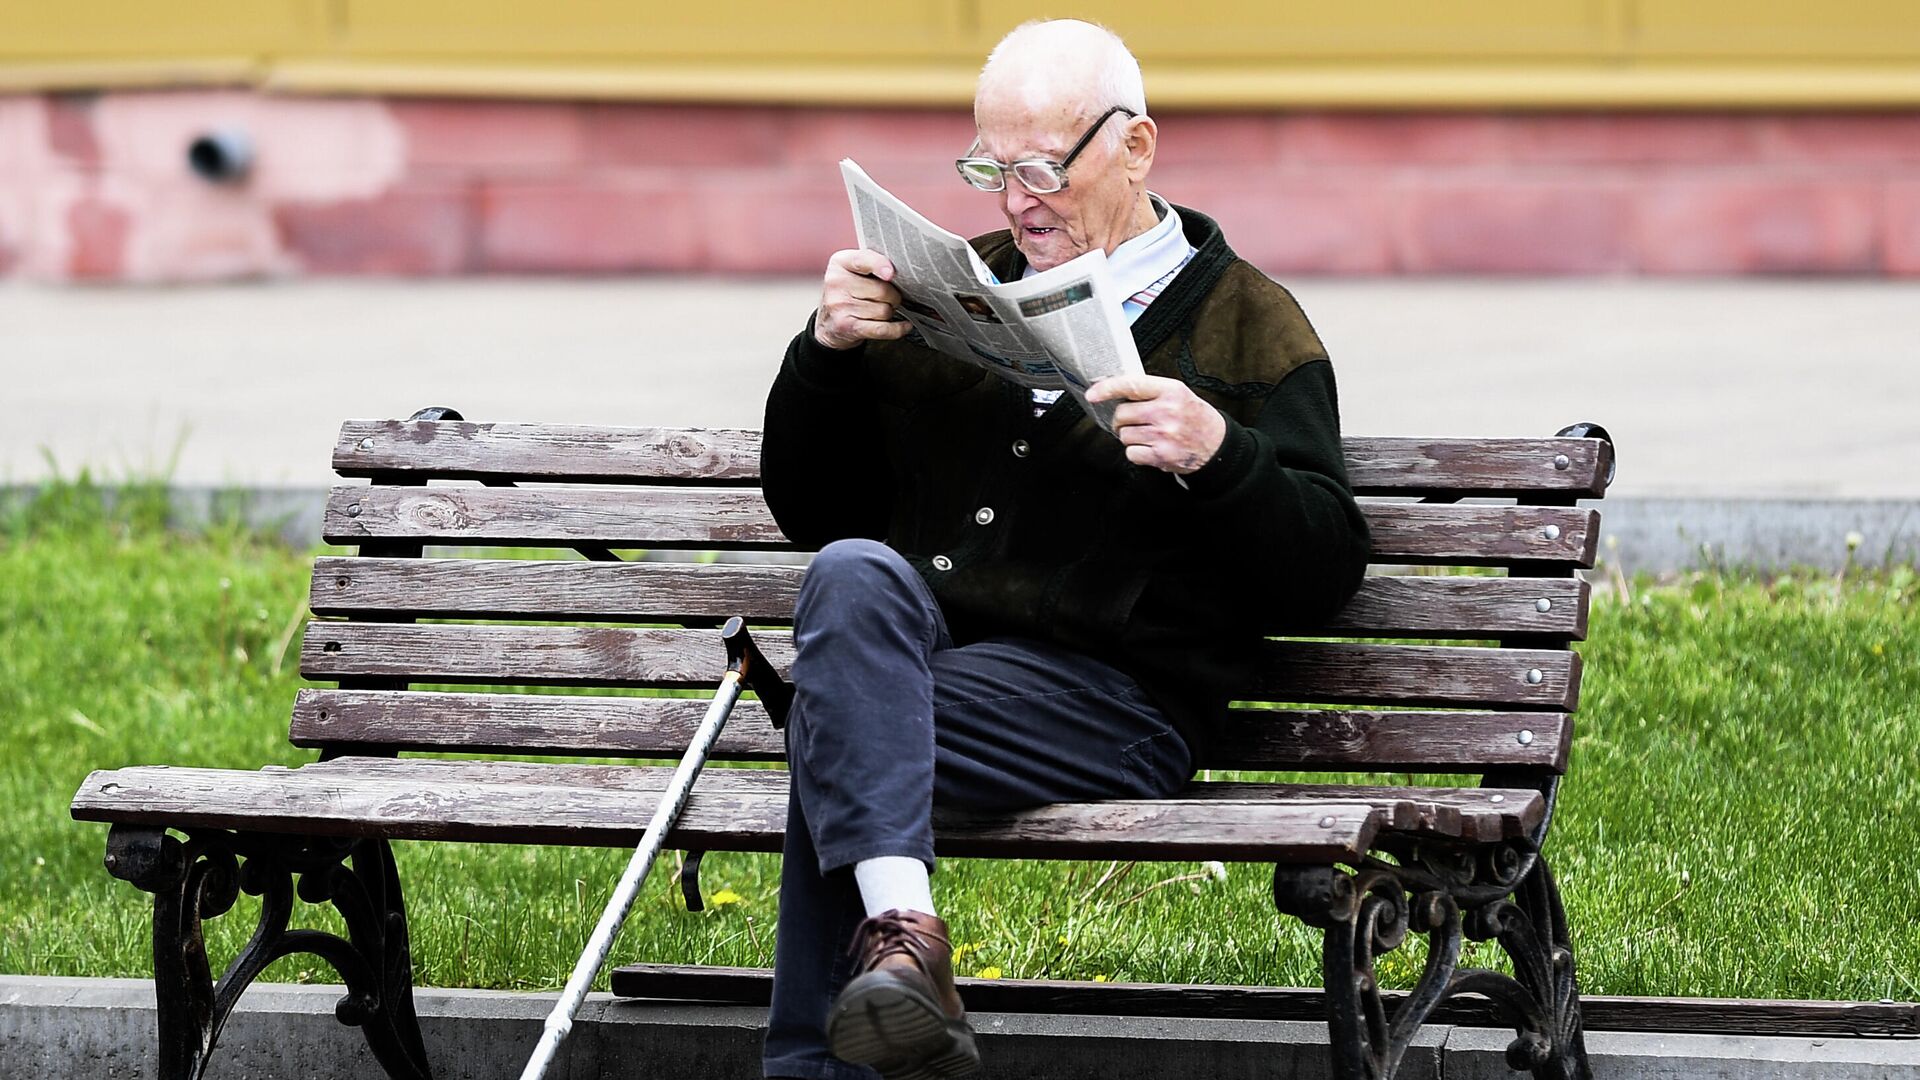 Мужчина читает газету на улице на лавочке в Москве - РИА Новости, 1920, 18.10.2020